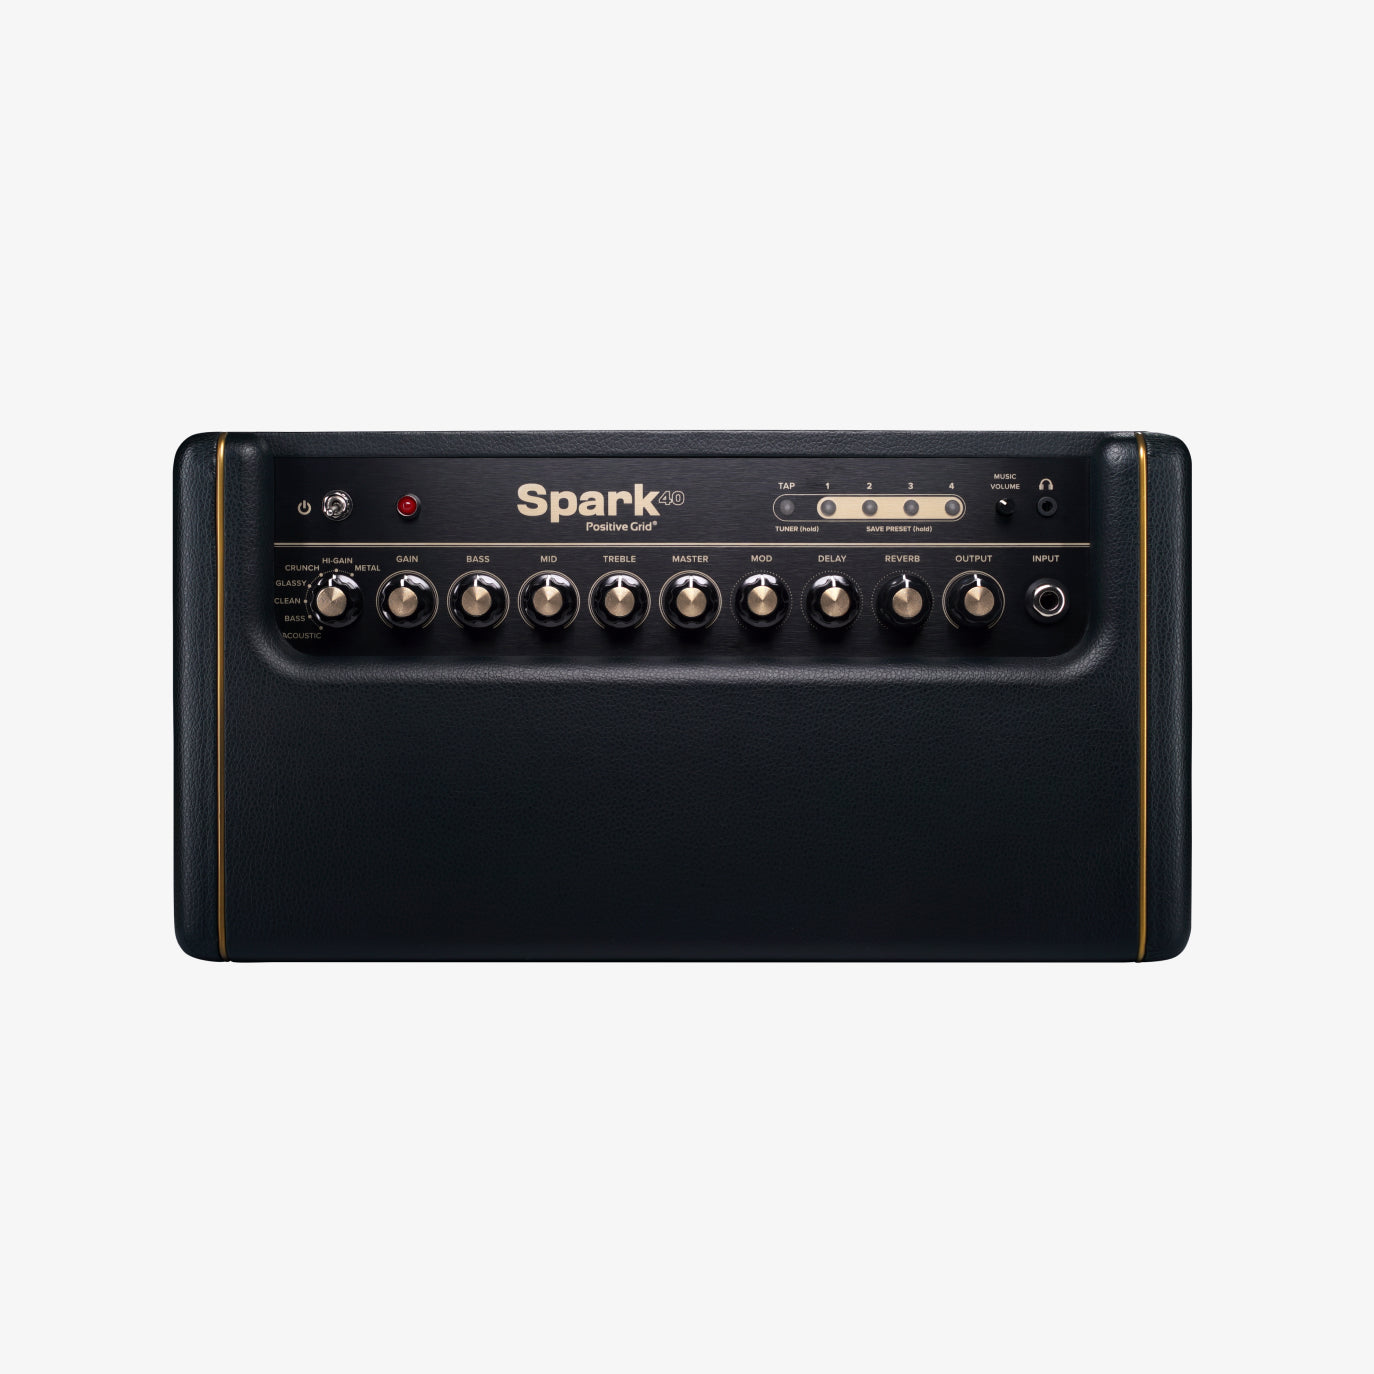 Spark | 40W Smart Guitar Amp & App – Positive Grid